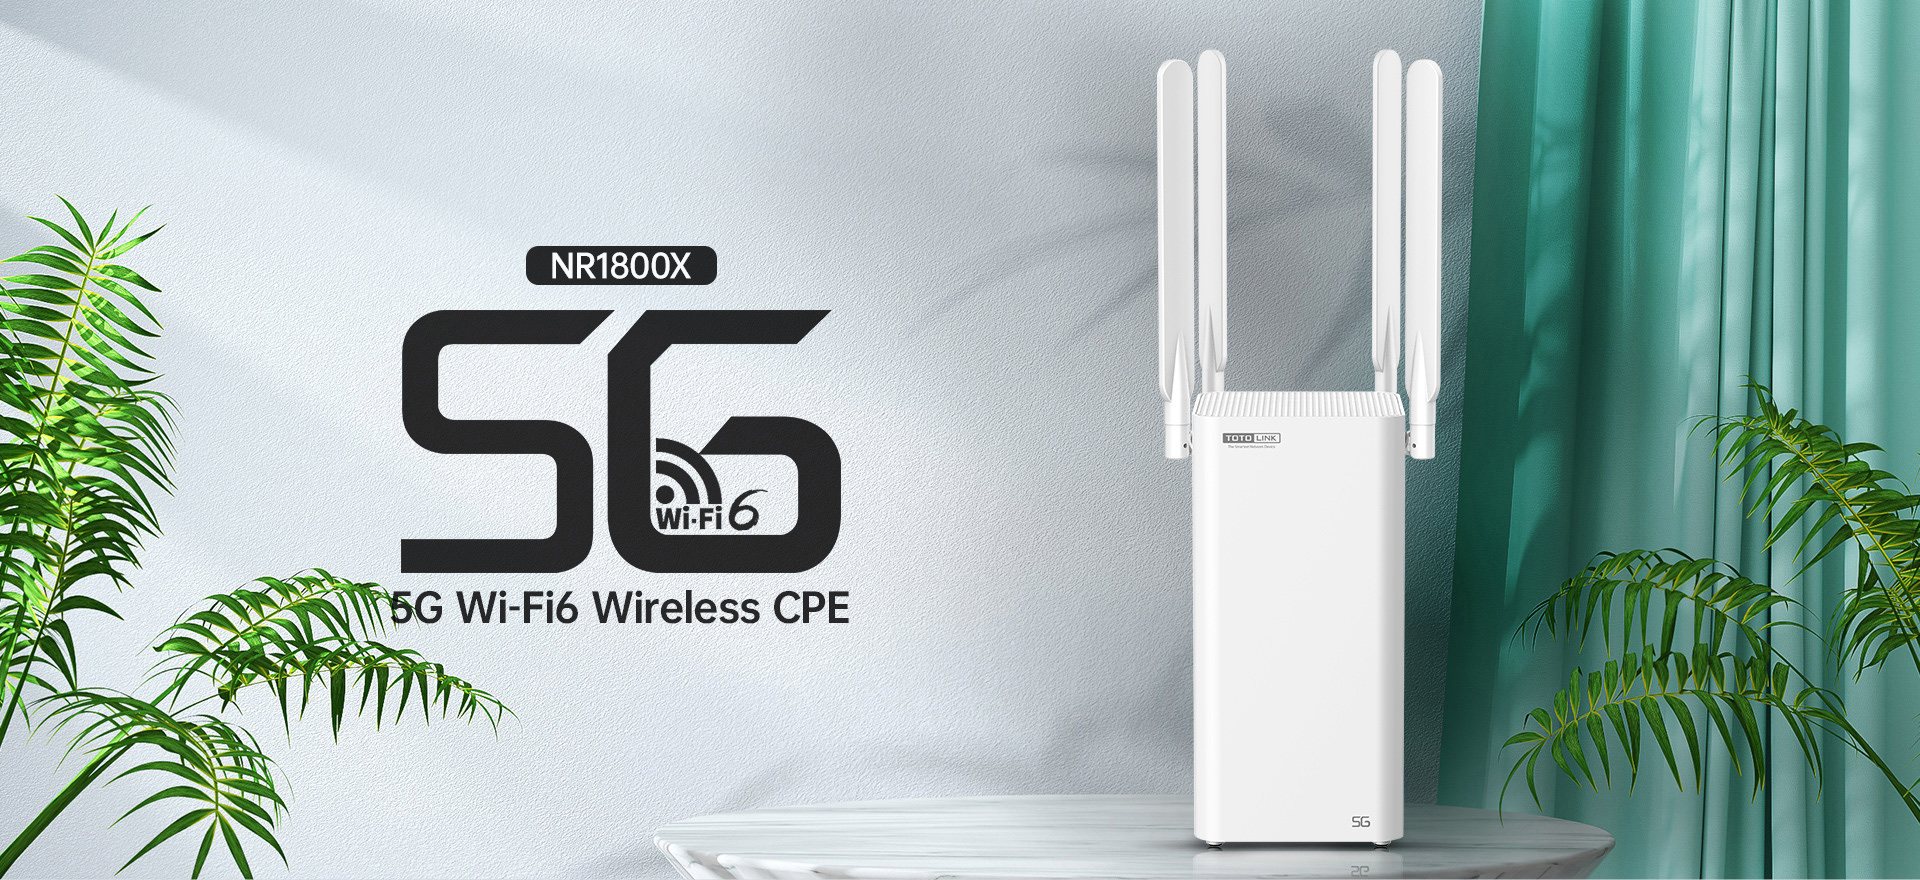  5G Wi-Fi6  Wireless  CPE  Dubai